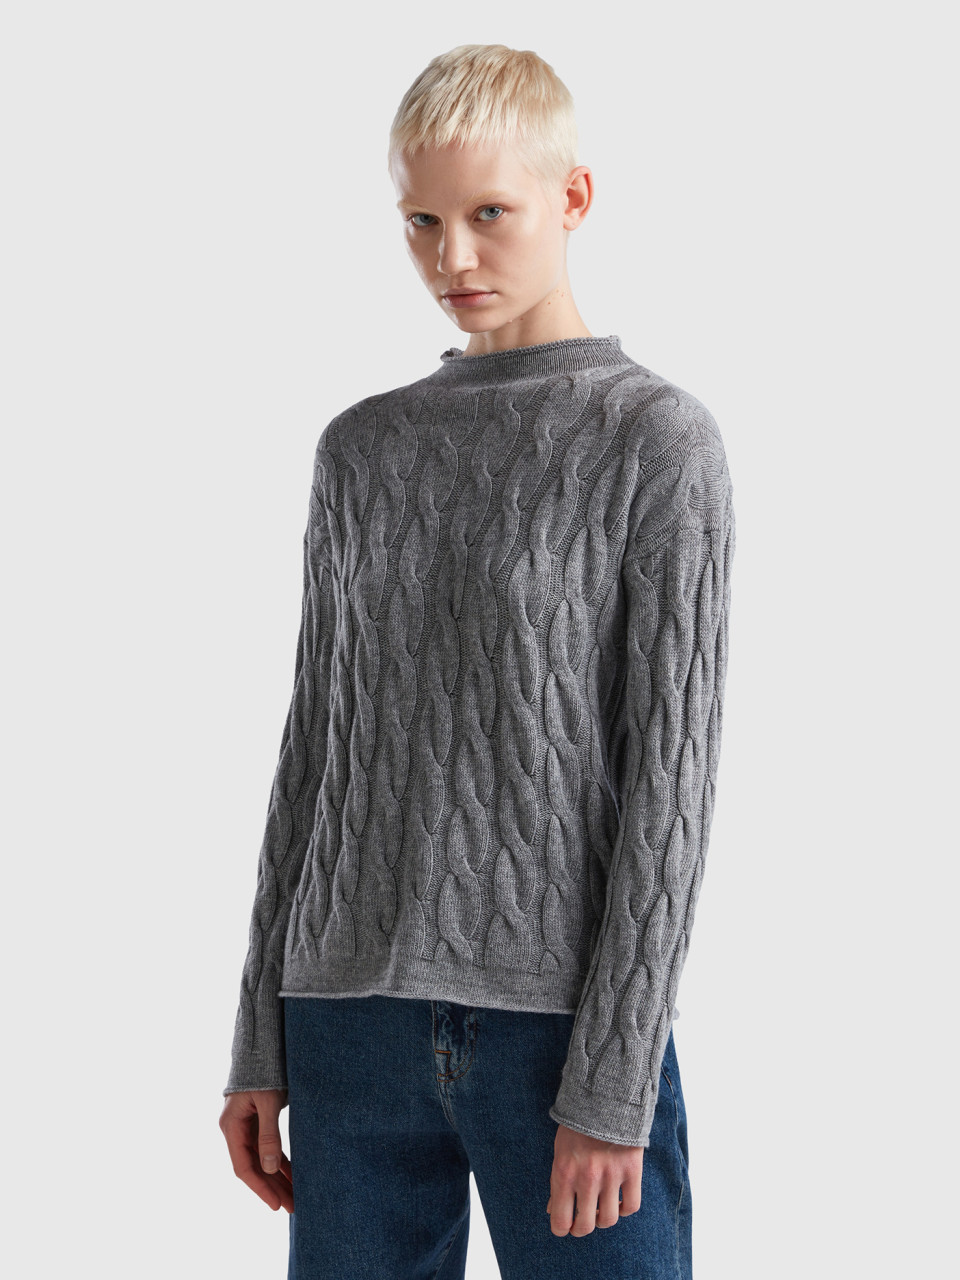 Benetton, Cable Knit Sweater, Light Gray, Women